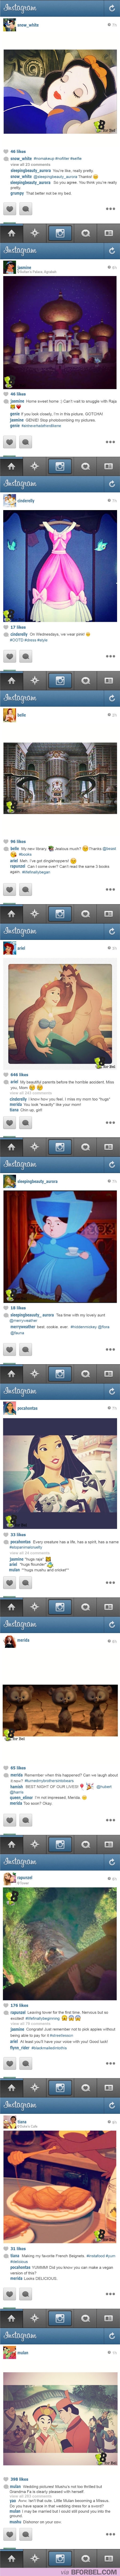 If Disney Princesses Had Instagram*